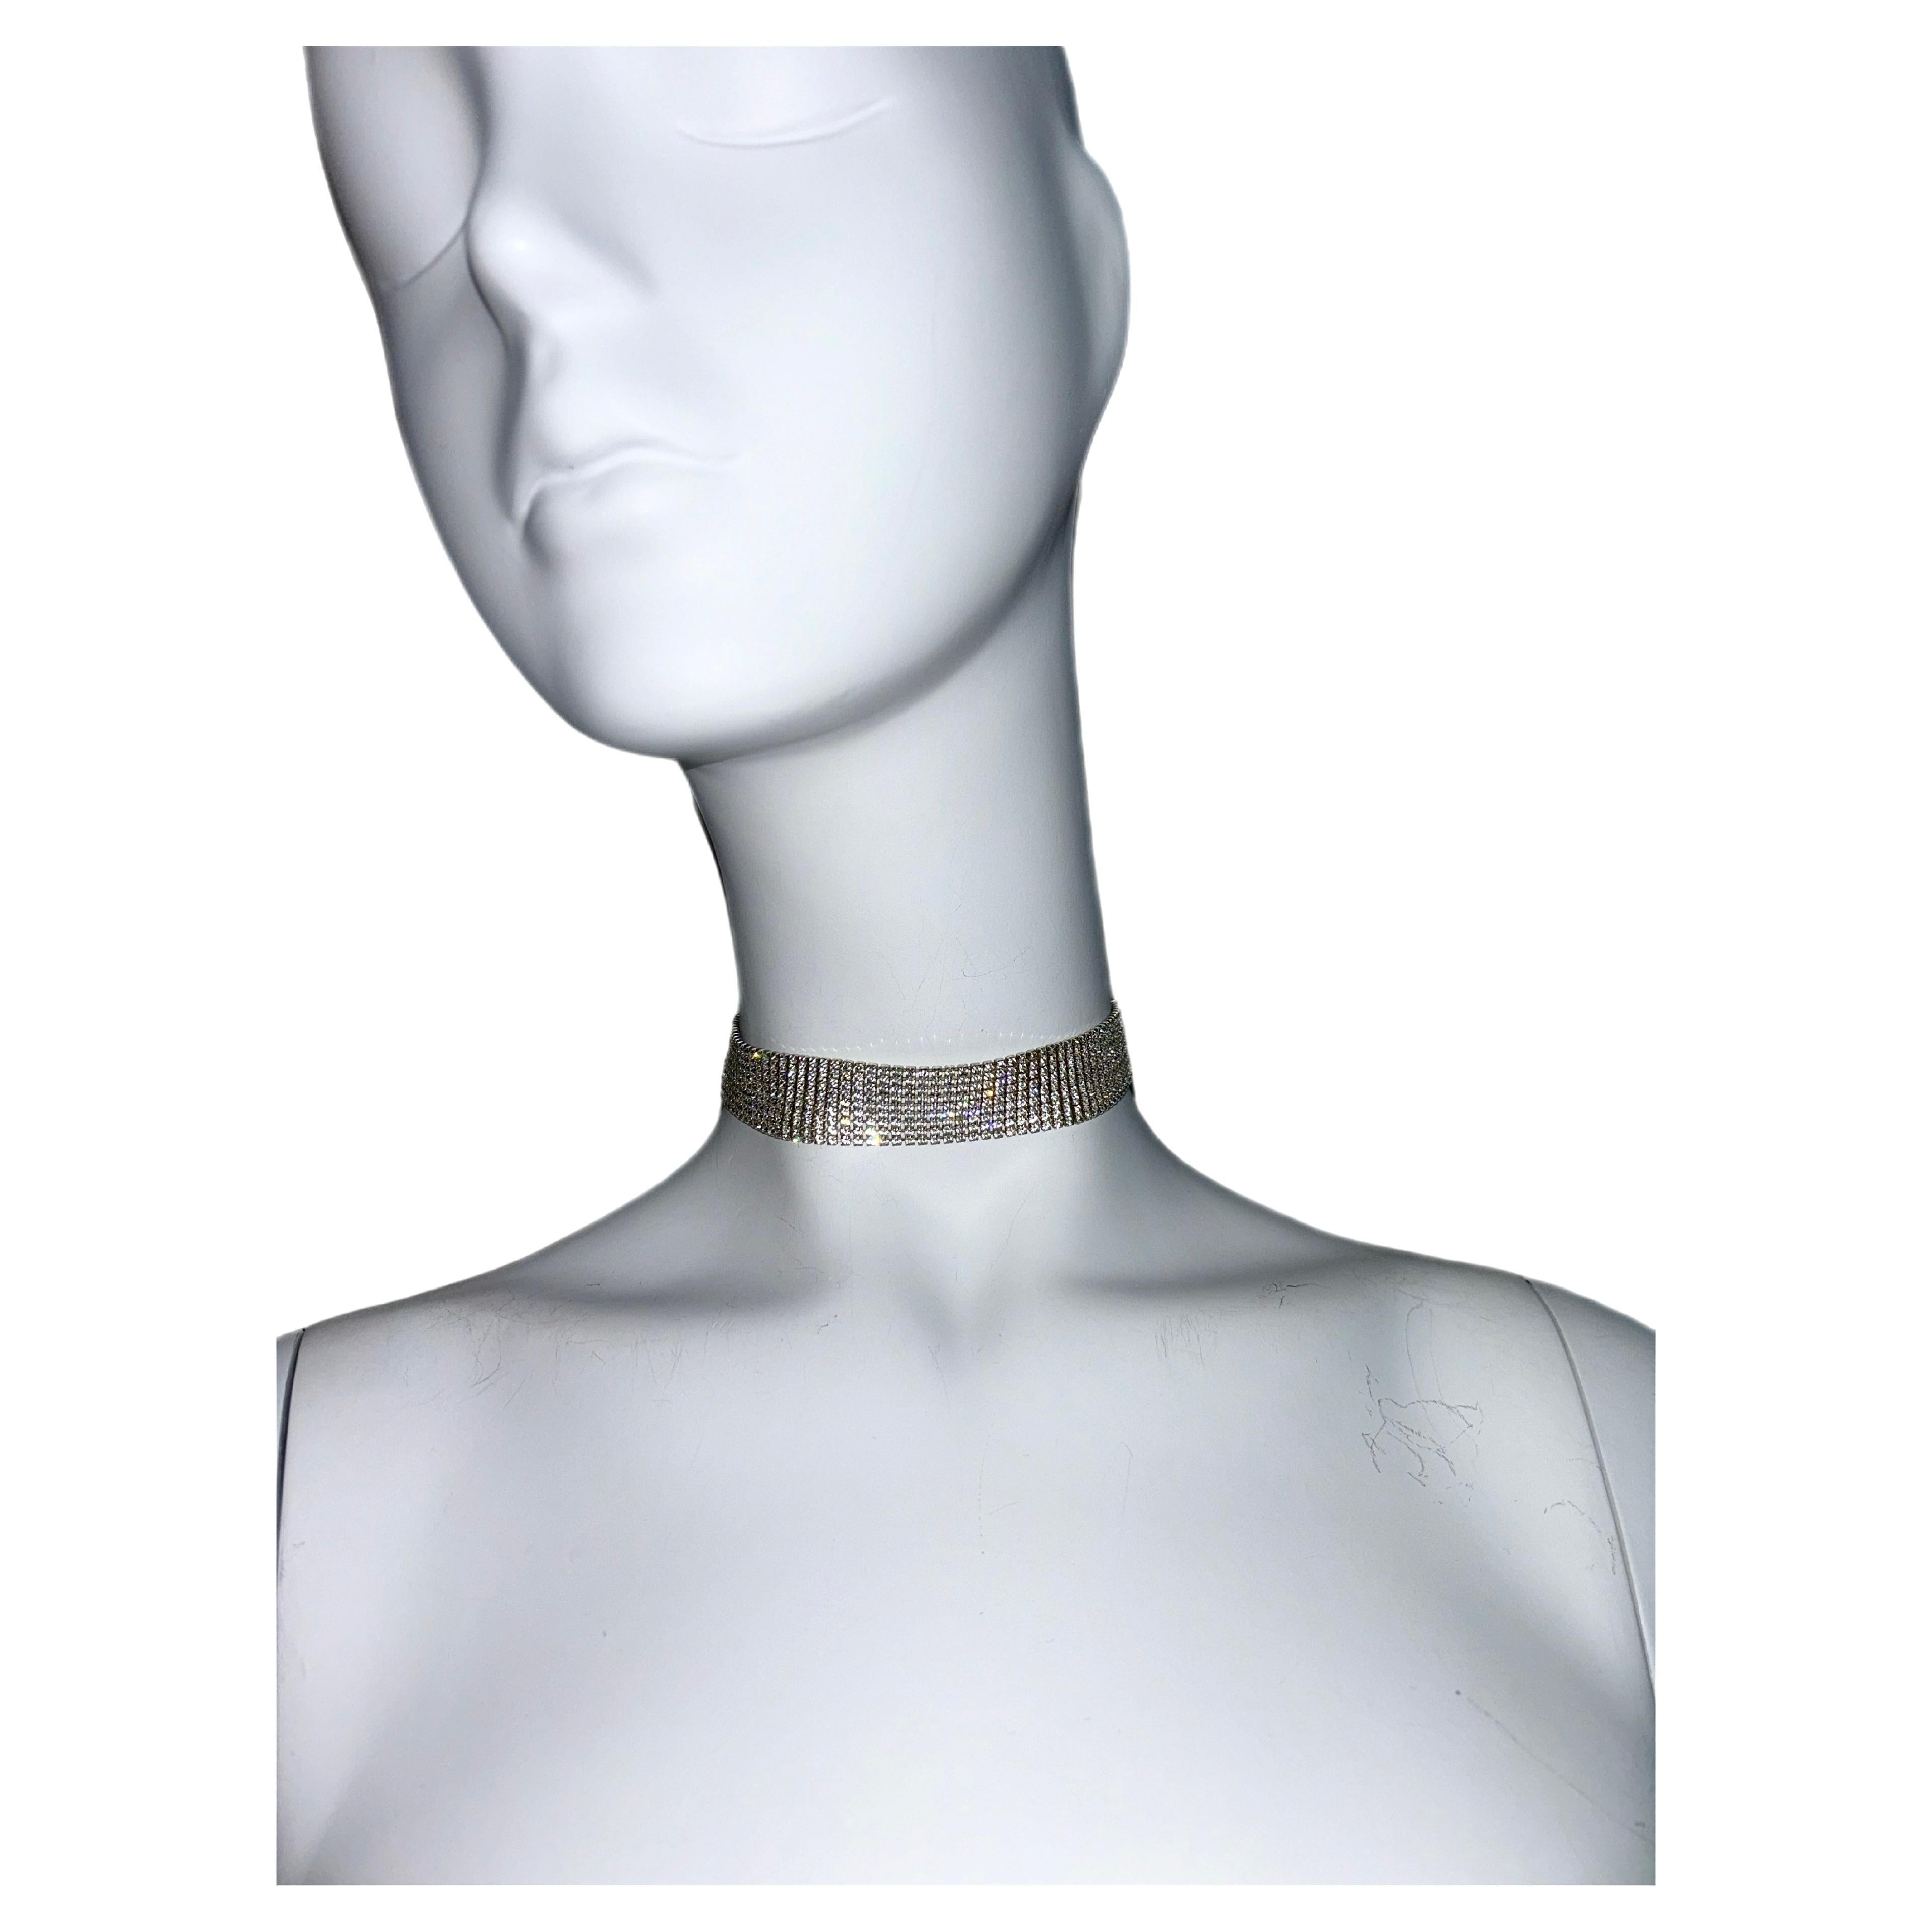 RALPH LAUREN COLLECTION vintage Swarovski crystal silver choker necklace For Sale